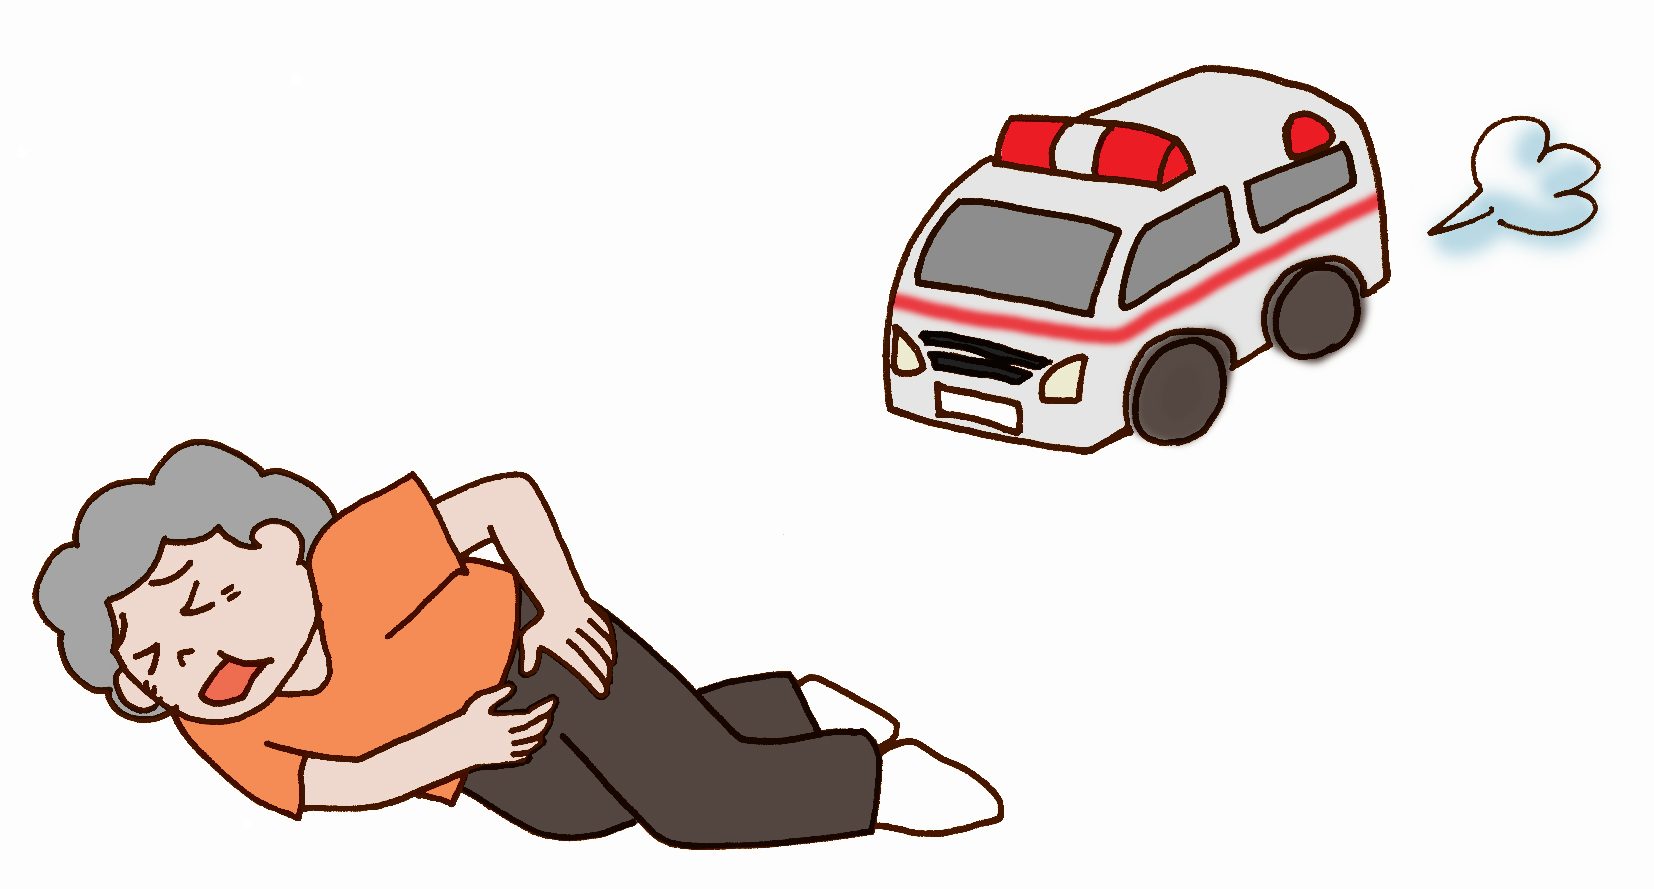 Otナガミネのリハビリイラスト集 患者 転倒 事故 ケガ 怪我 転ぶ 骨折 救急搬送 救急要請 救急車